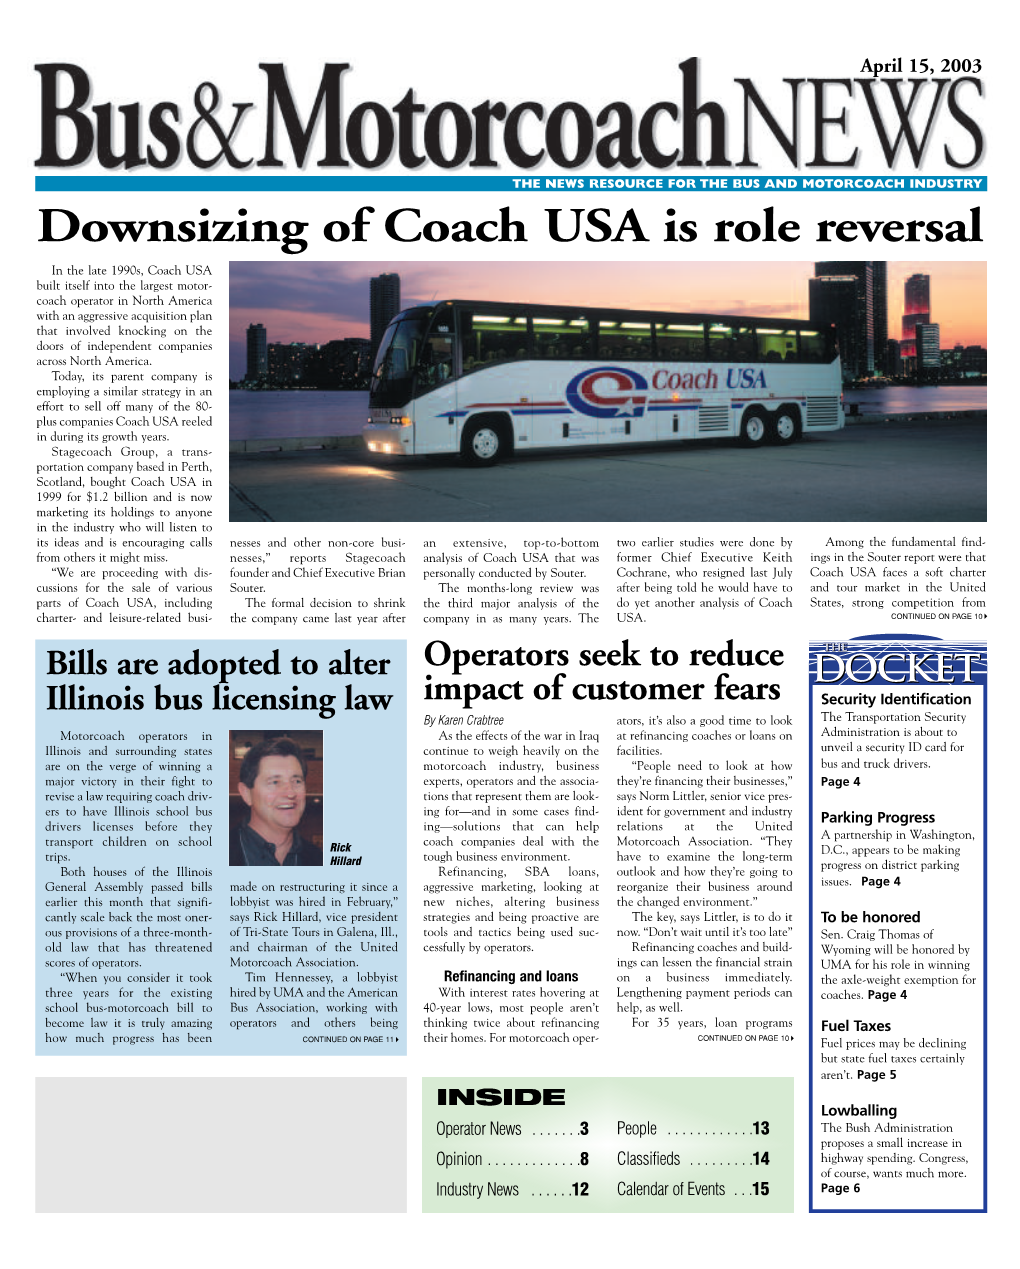 Bus & Motorcoach News